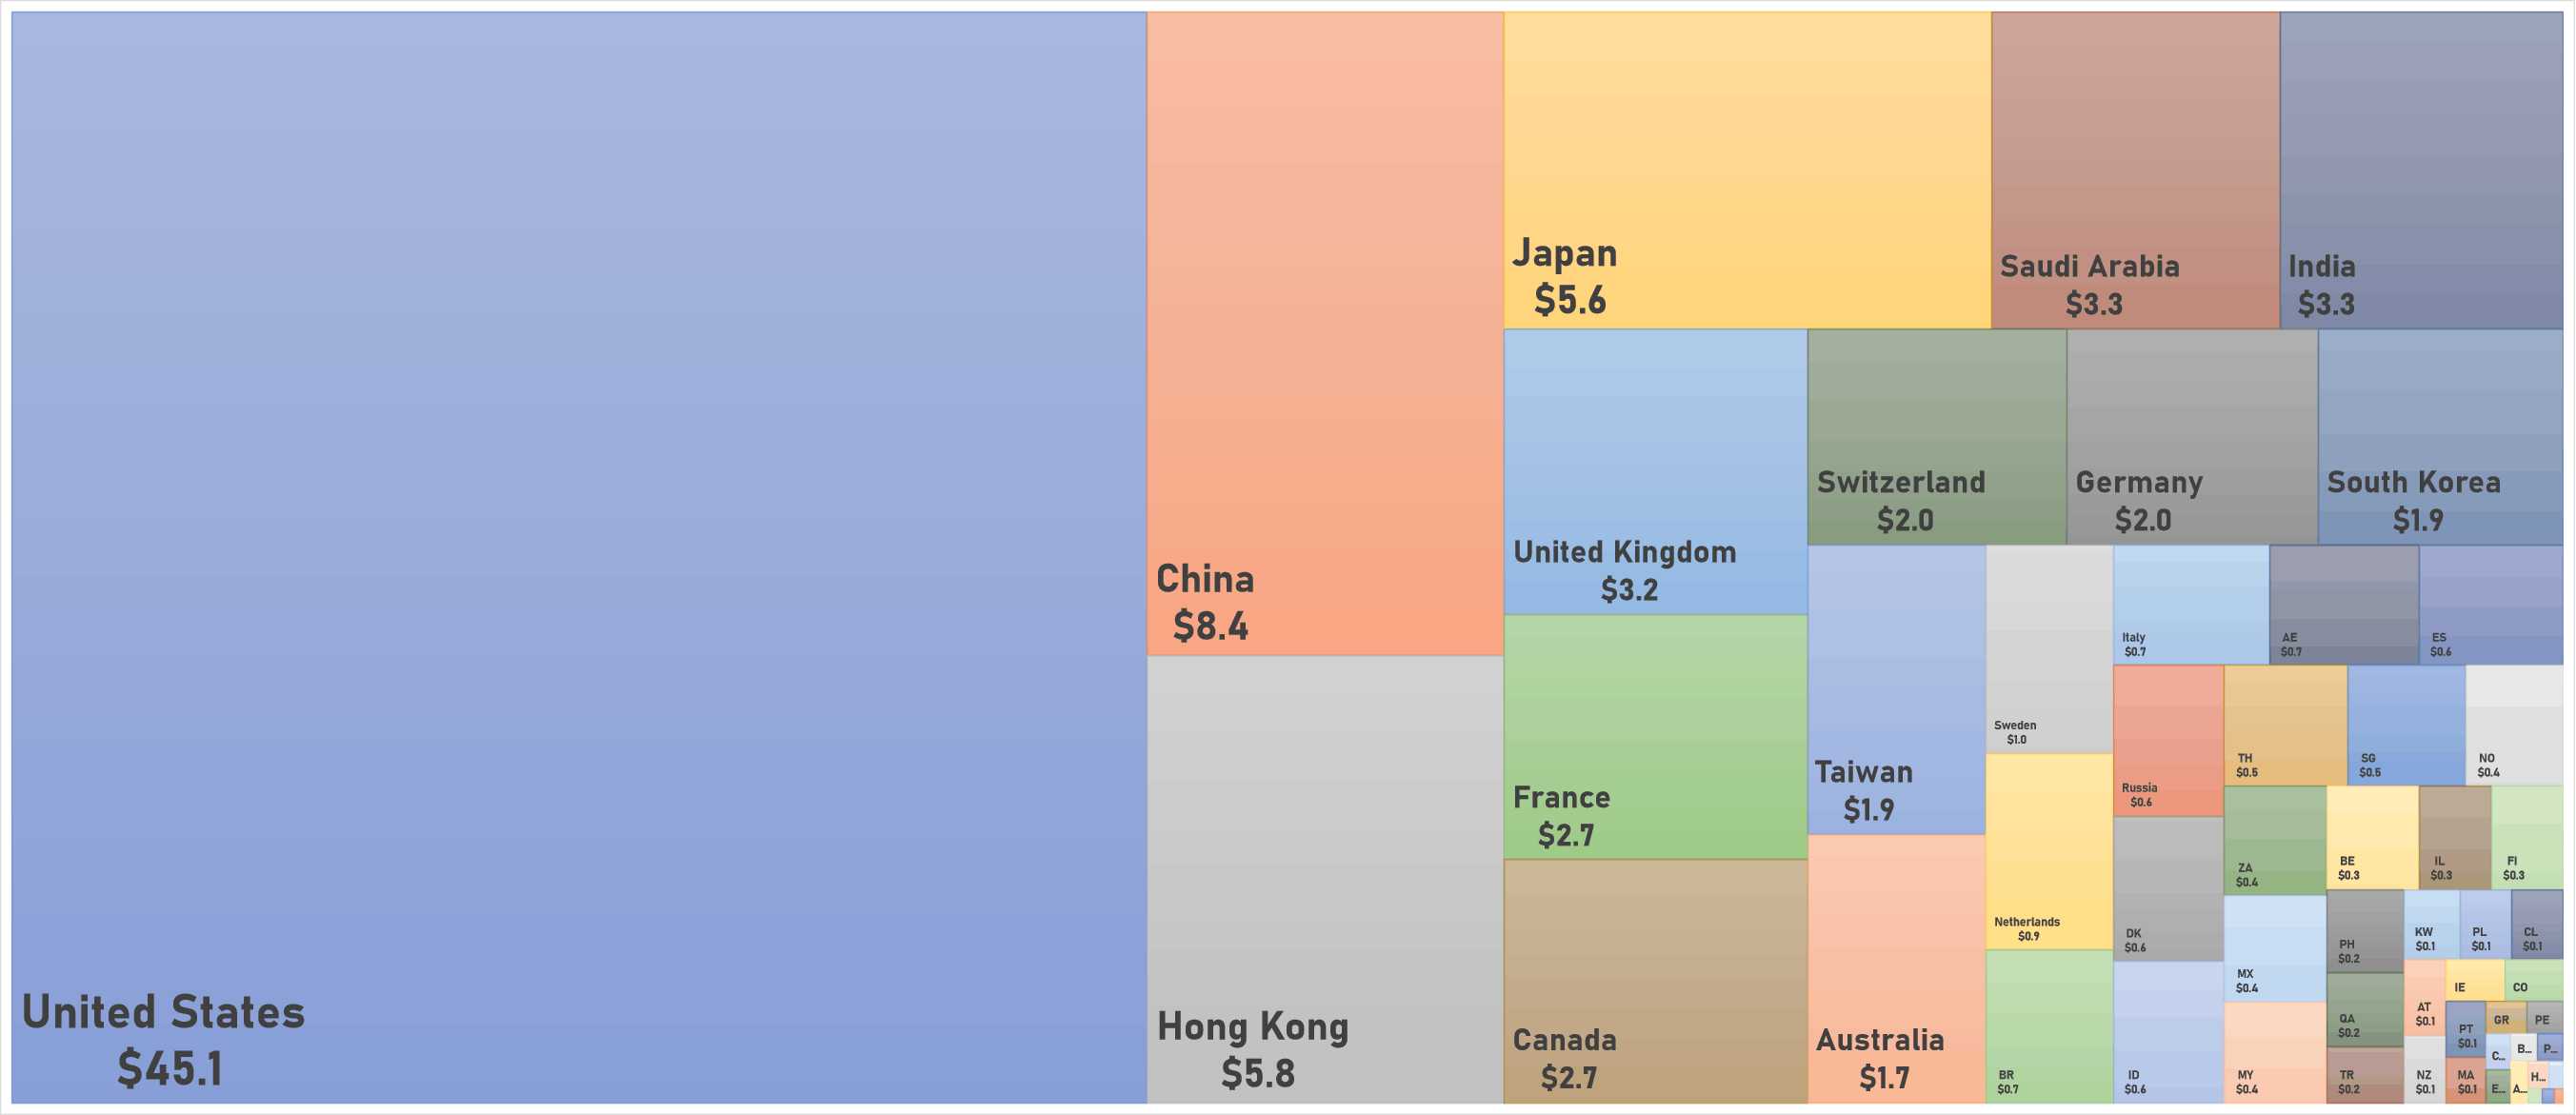 Current World Market Cap (in US$ trillion) | Sources: phipost.com, FactSet data